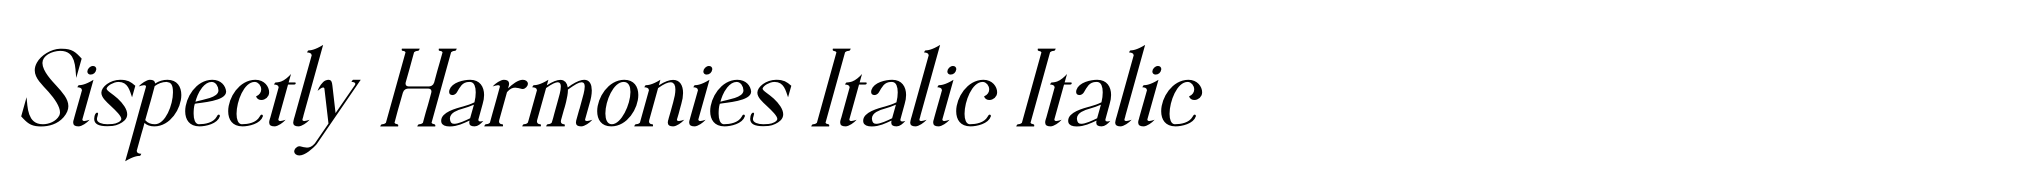 Sispectly Harmonies Italic Italic image